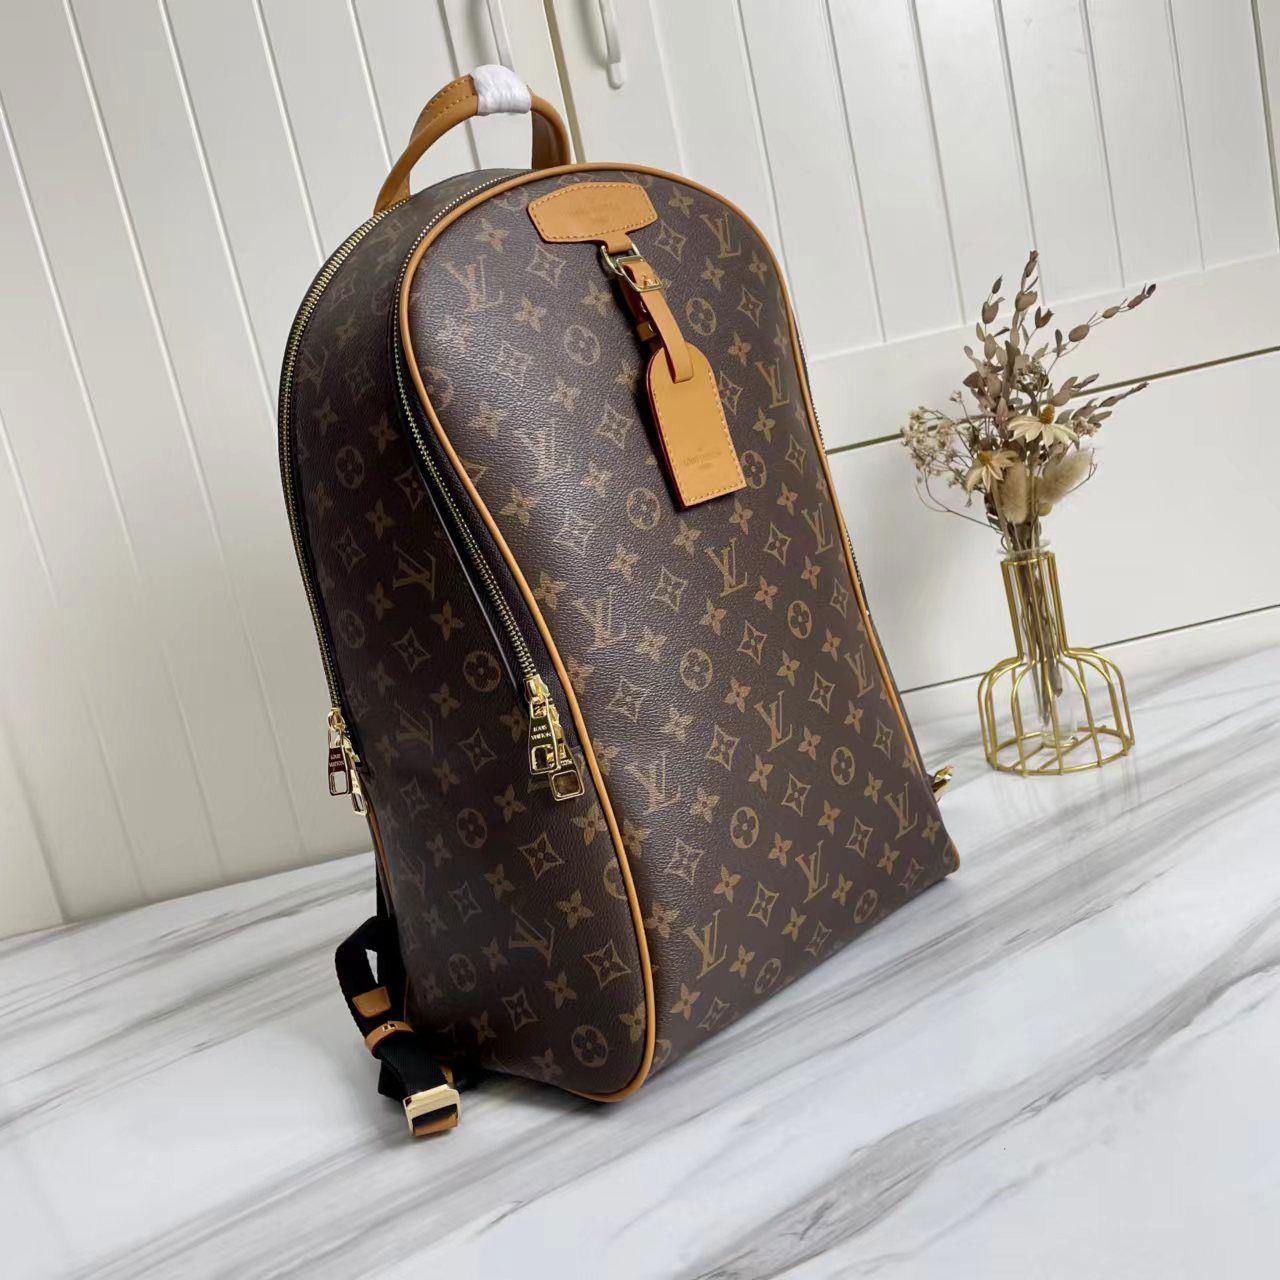 ackpack Blurry Monogram knapsack genuine leather travllling bag M46237 ...